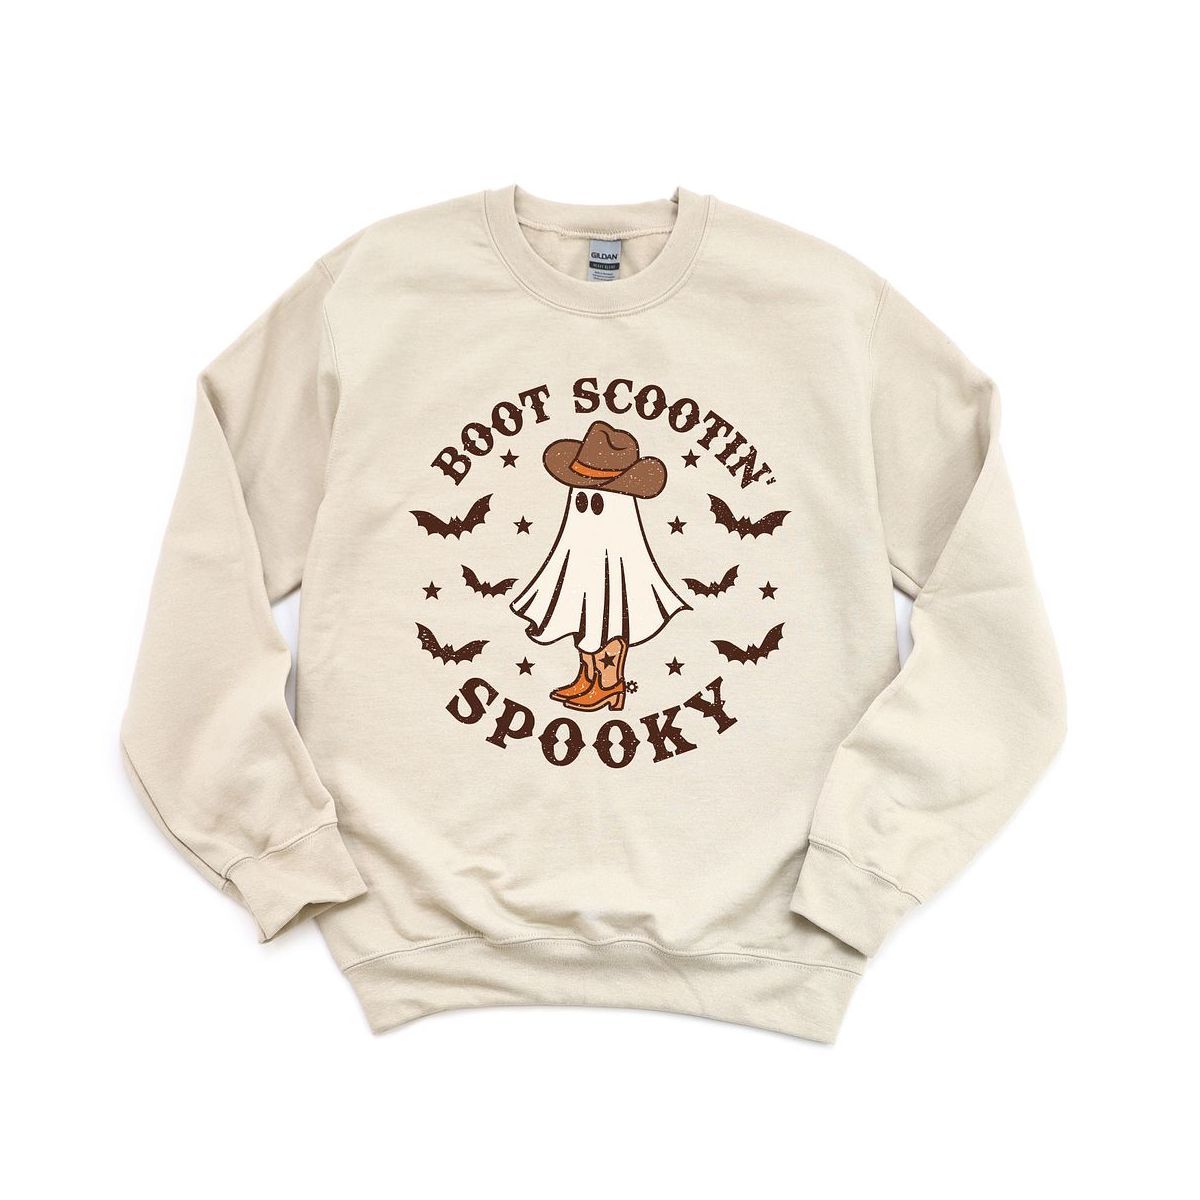 Simply Sage Market Women's Graphic Sweatshirt Boot Scootin' Spooky | Target